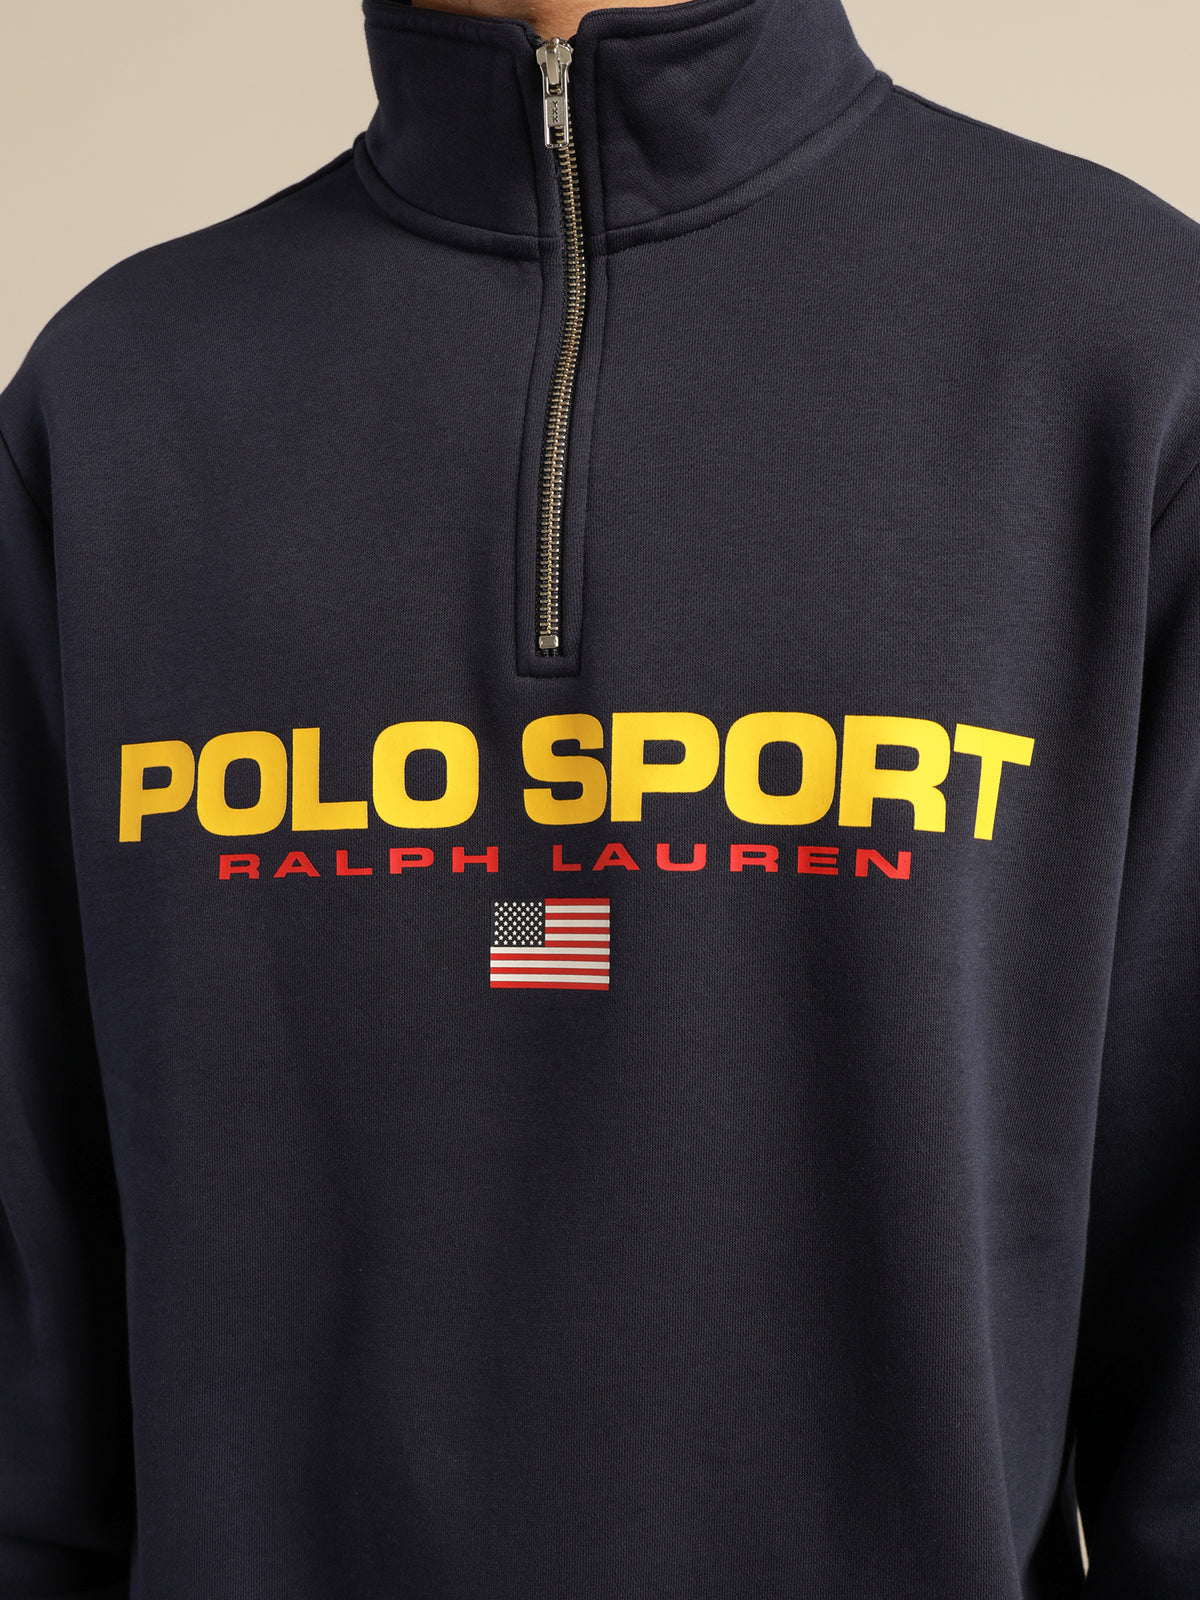 Polo Sport Quarter Zip in Cruise Navy